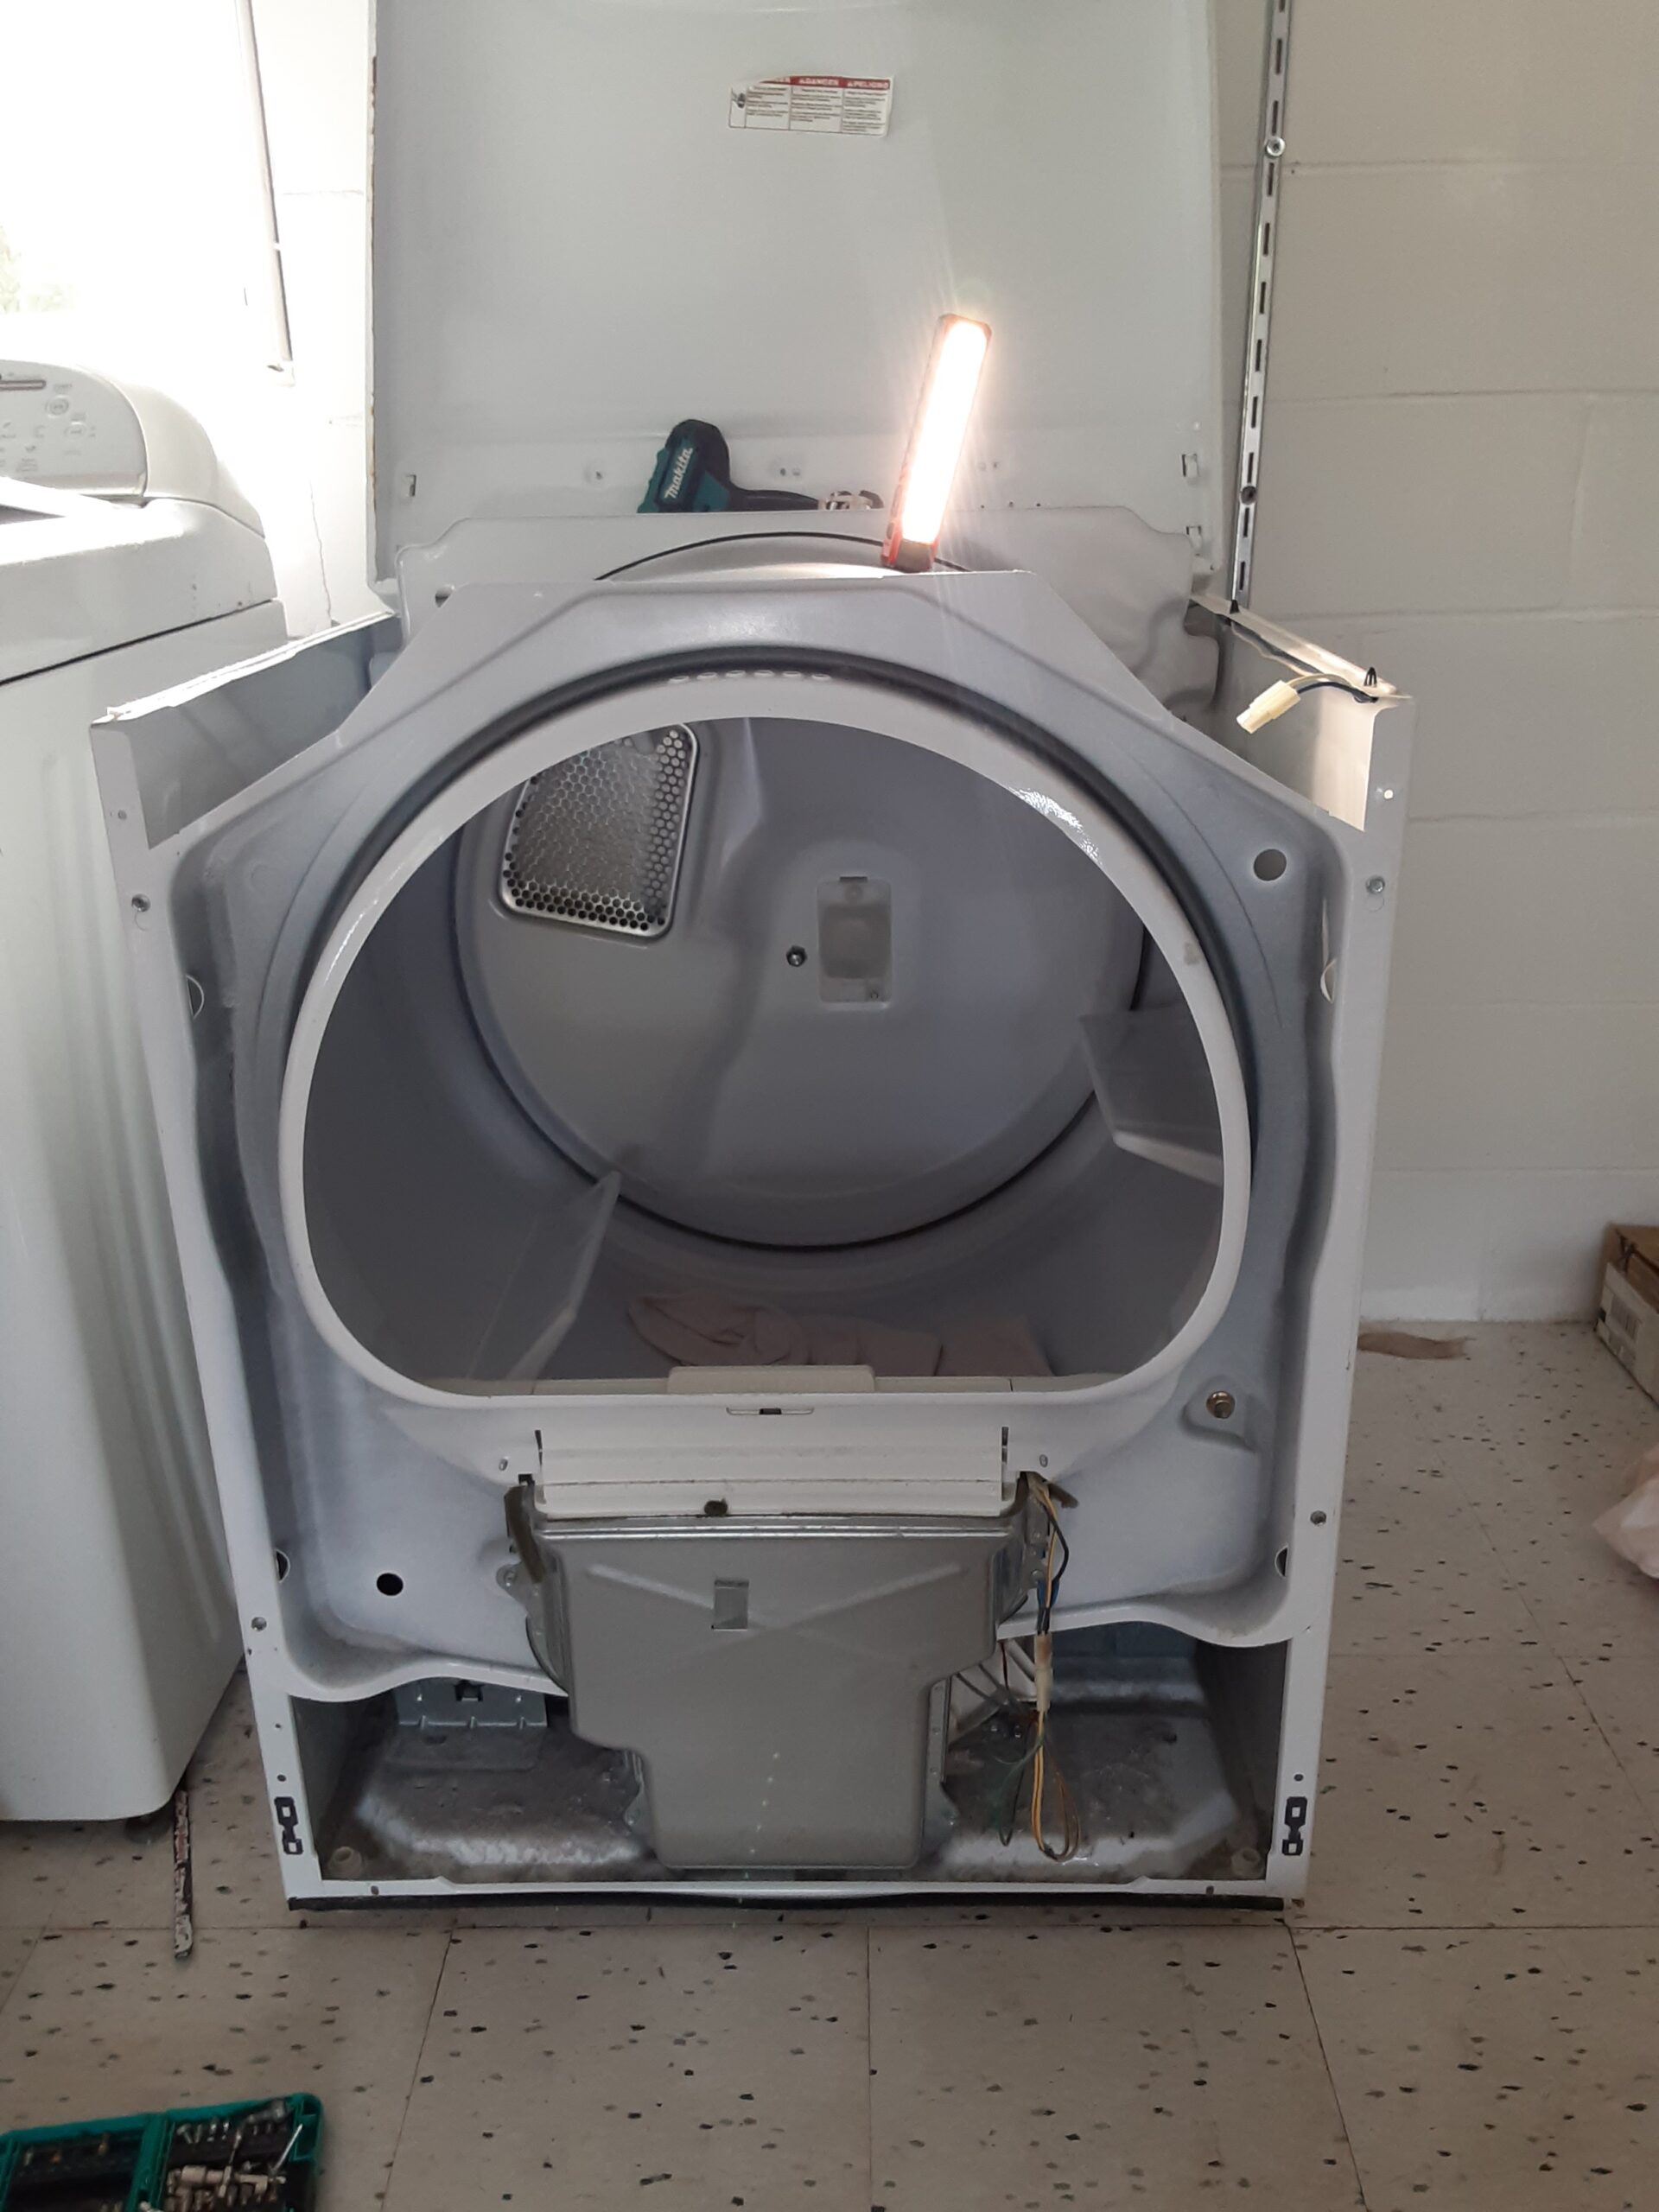 appliance repair dryer repair stops midcycle d st anthony fl 32617